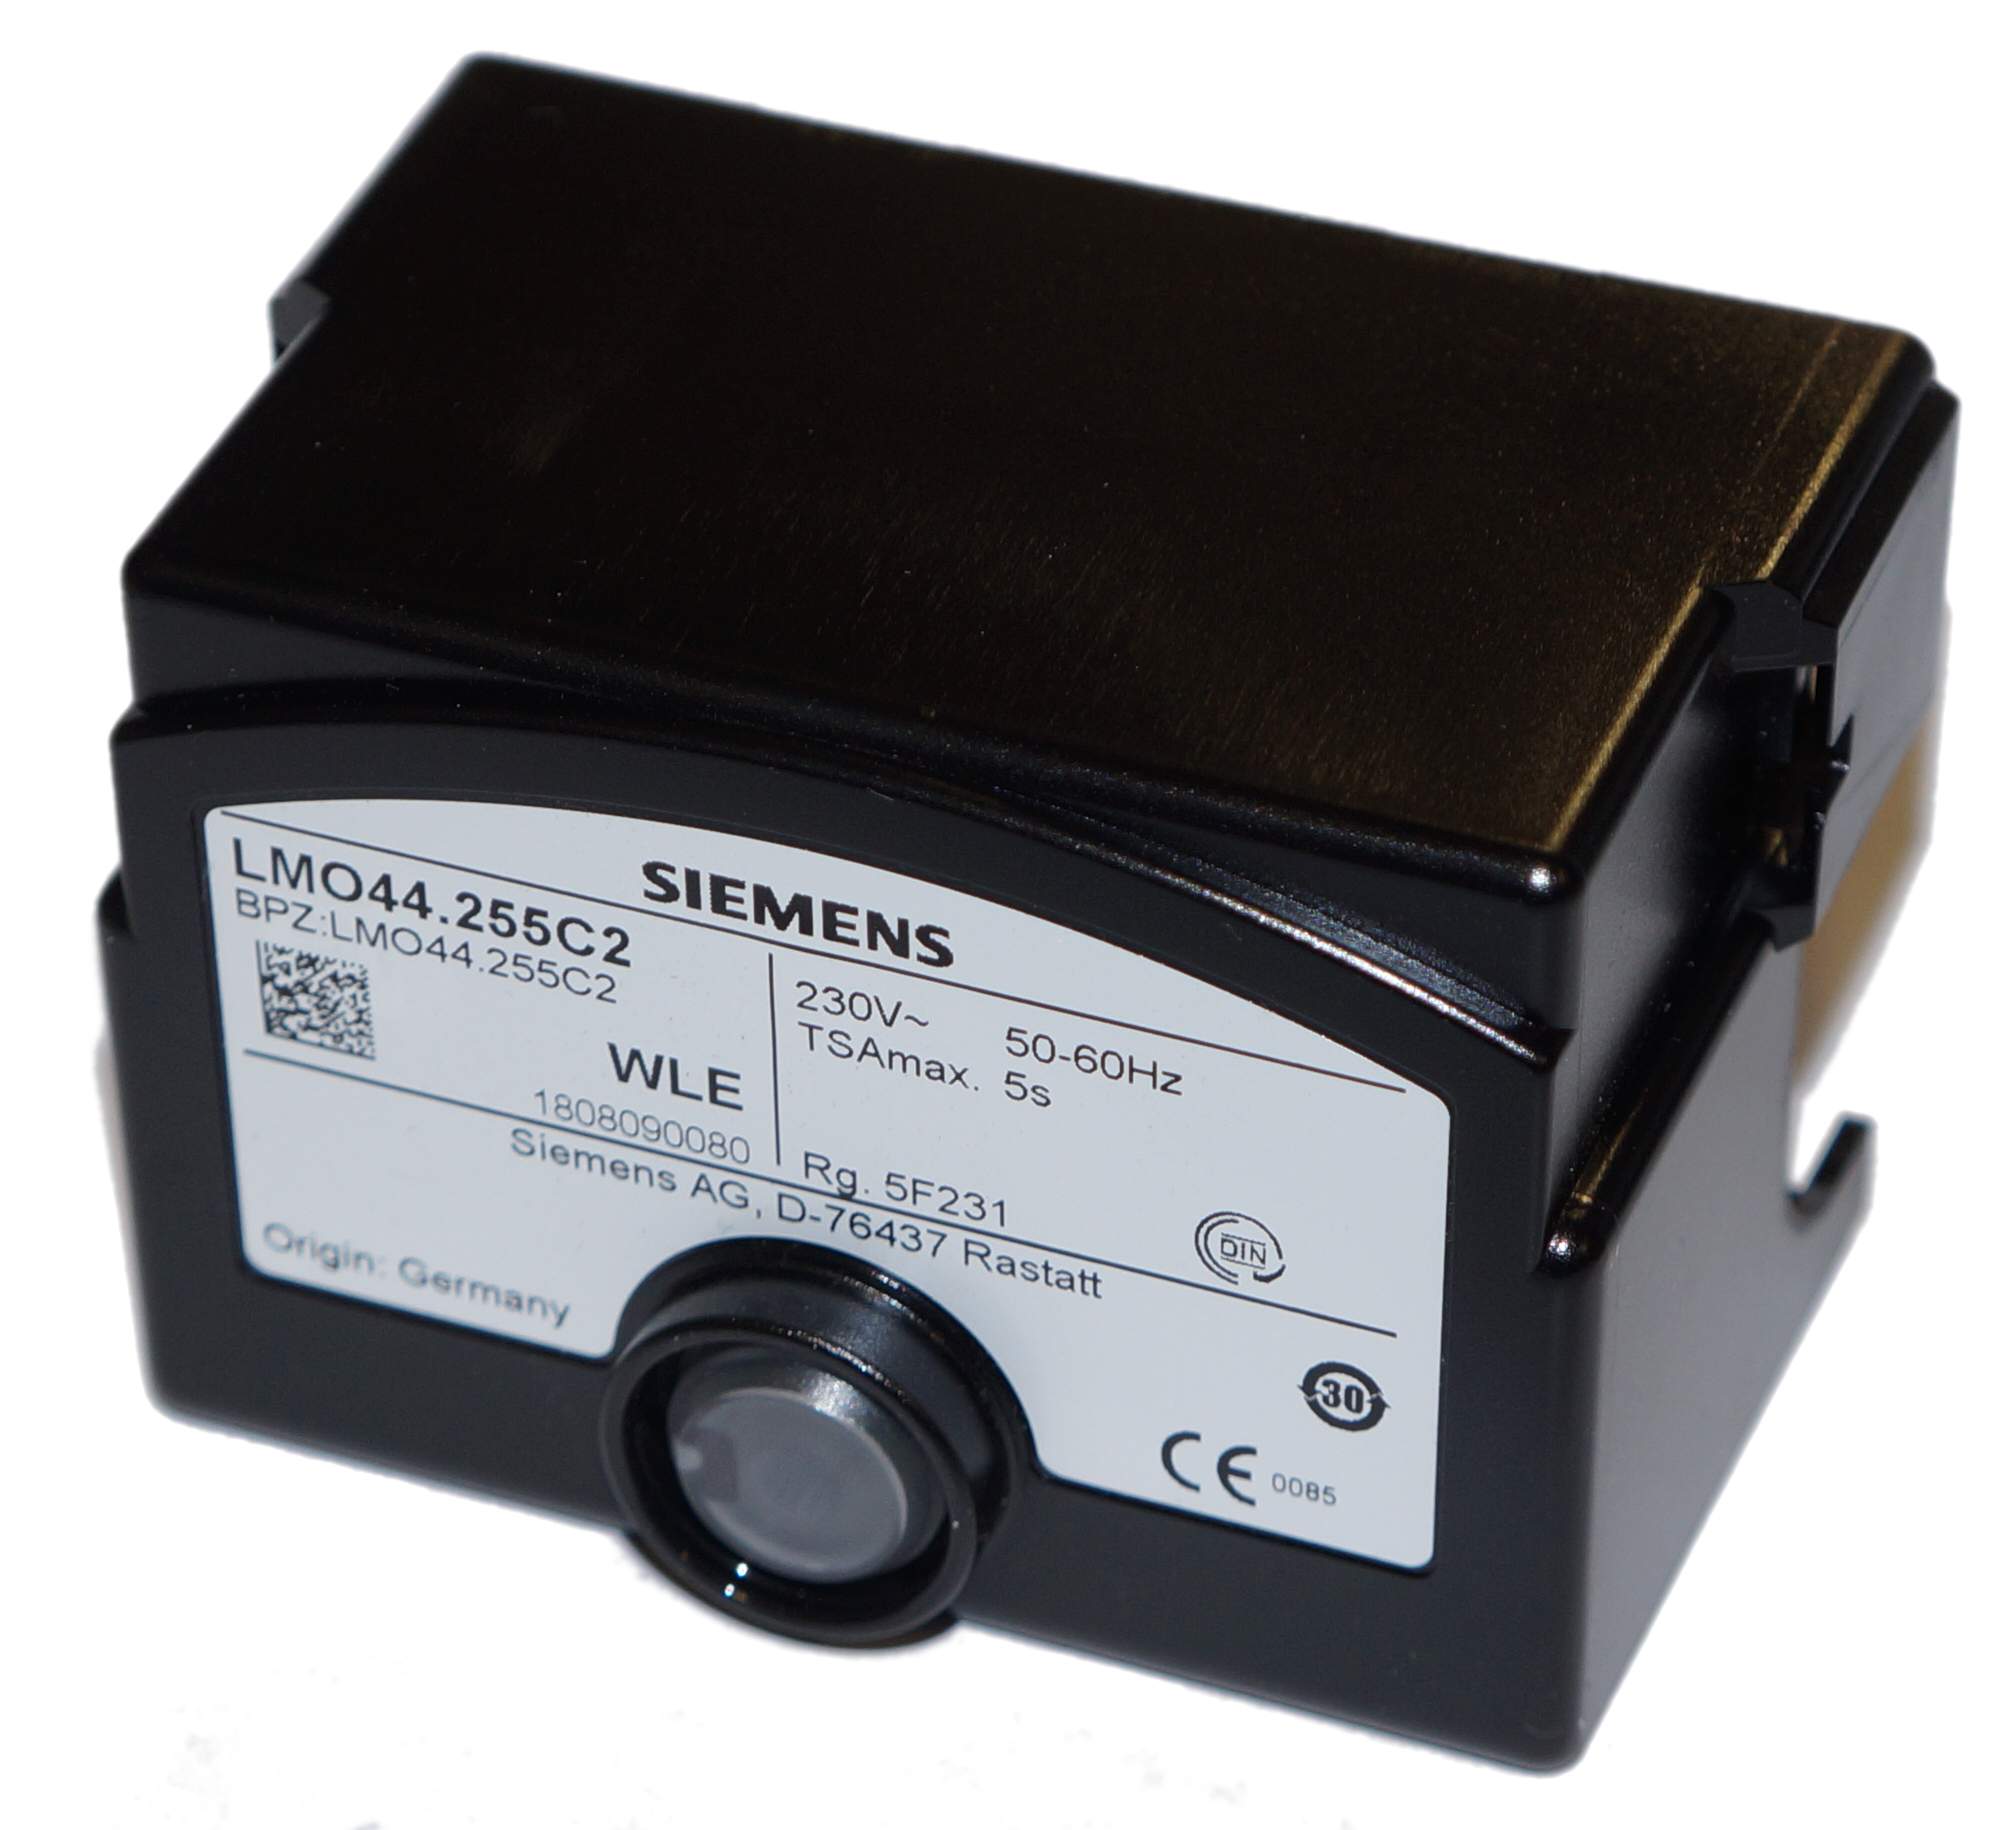  Siemens Relay LMO44.255 C2